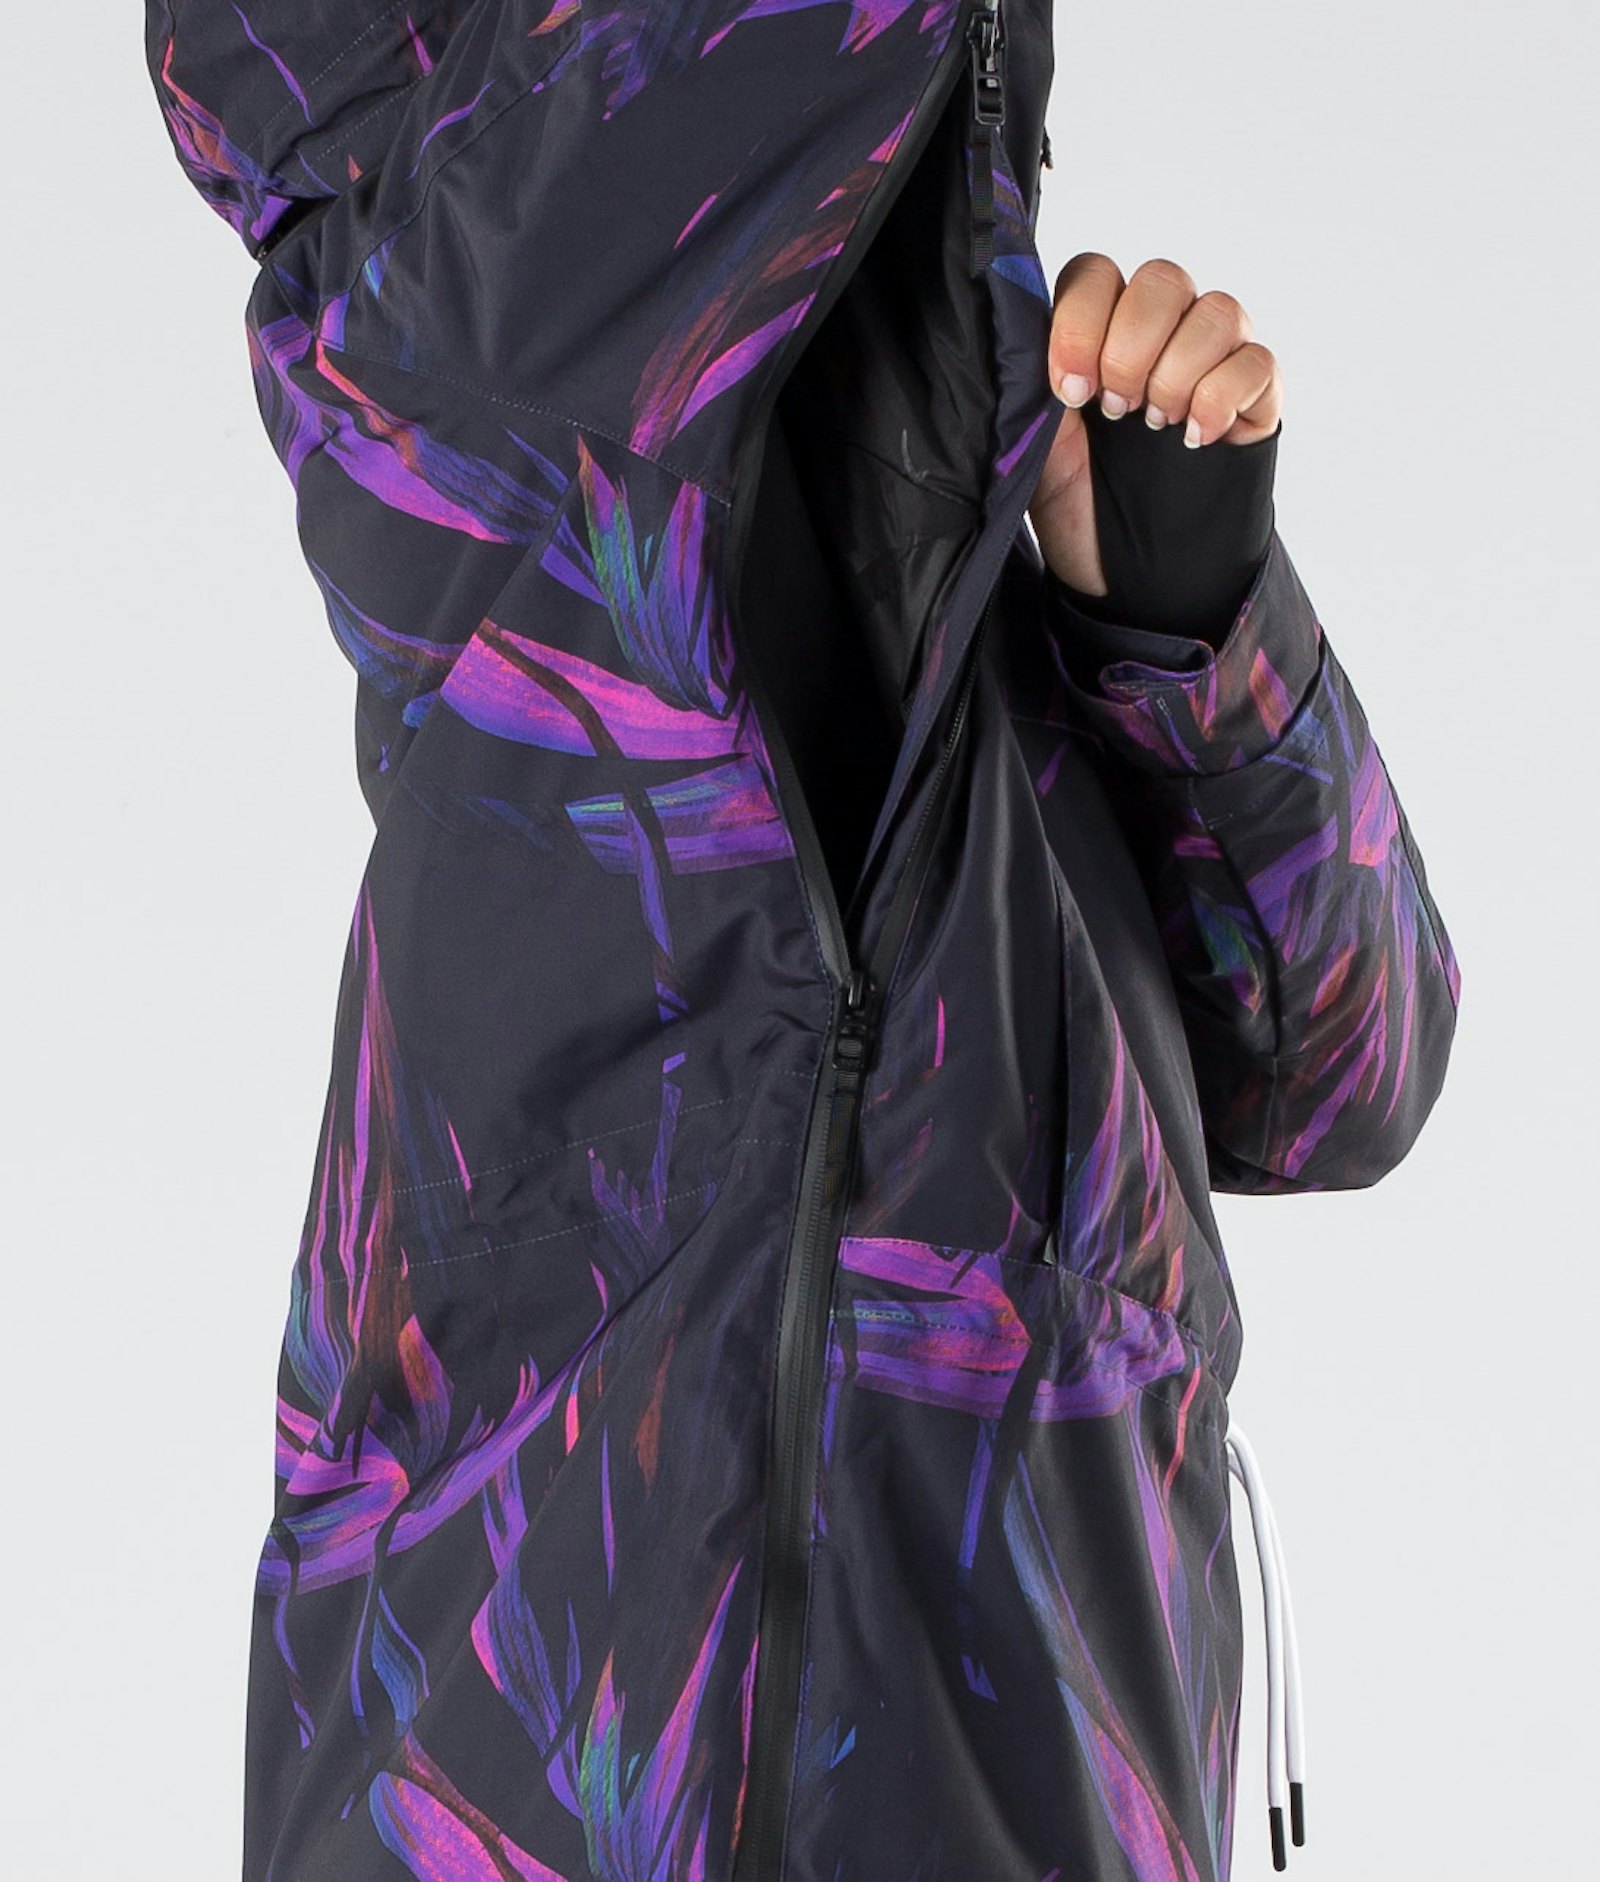 Dope Annok W 2019 Snowboard Jacket Women Purple Foliage